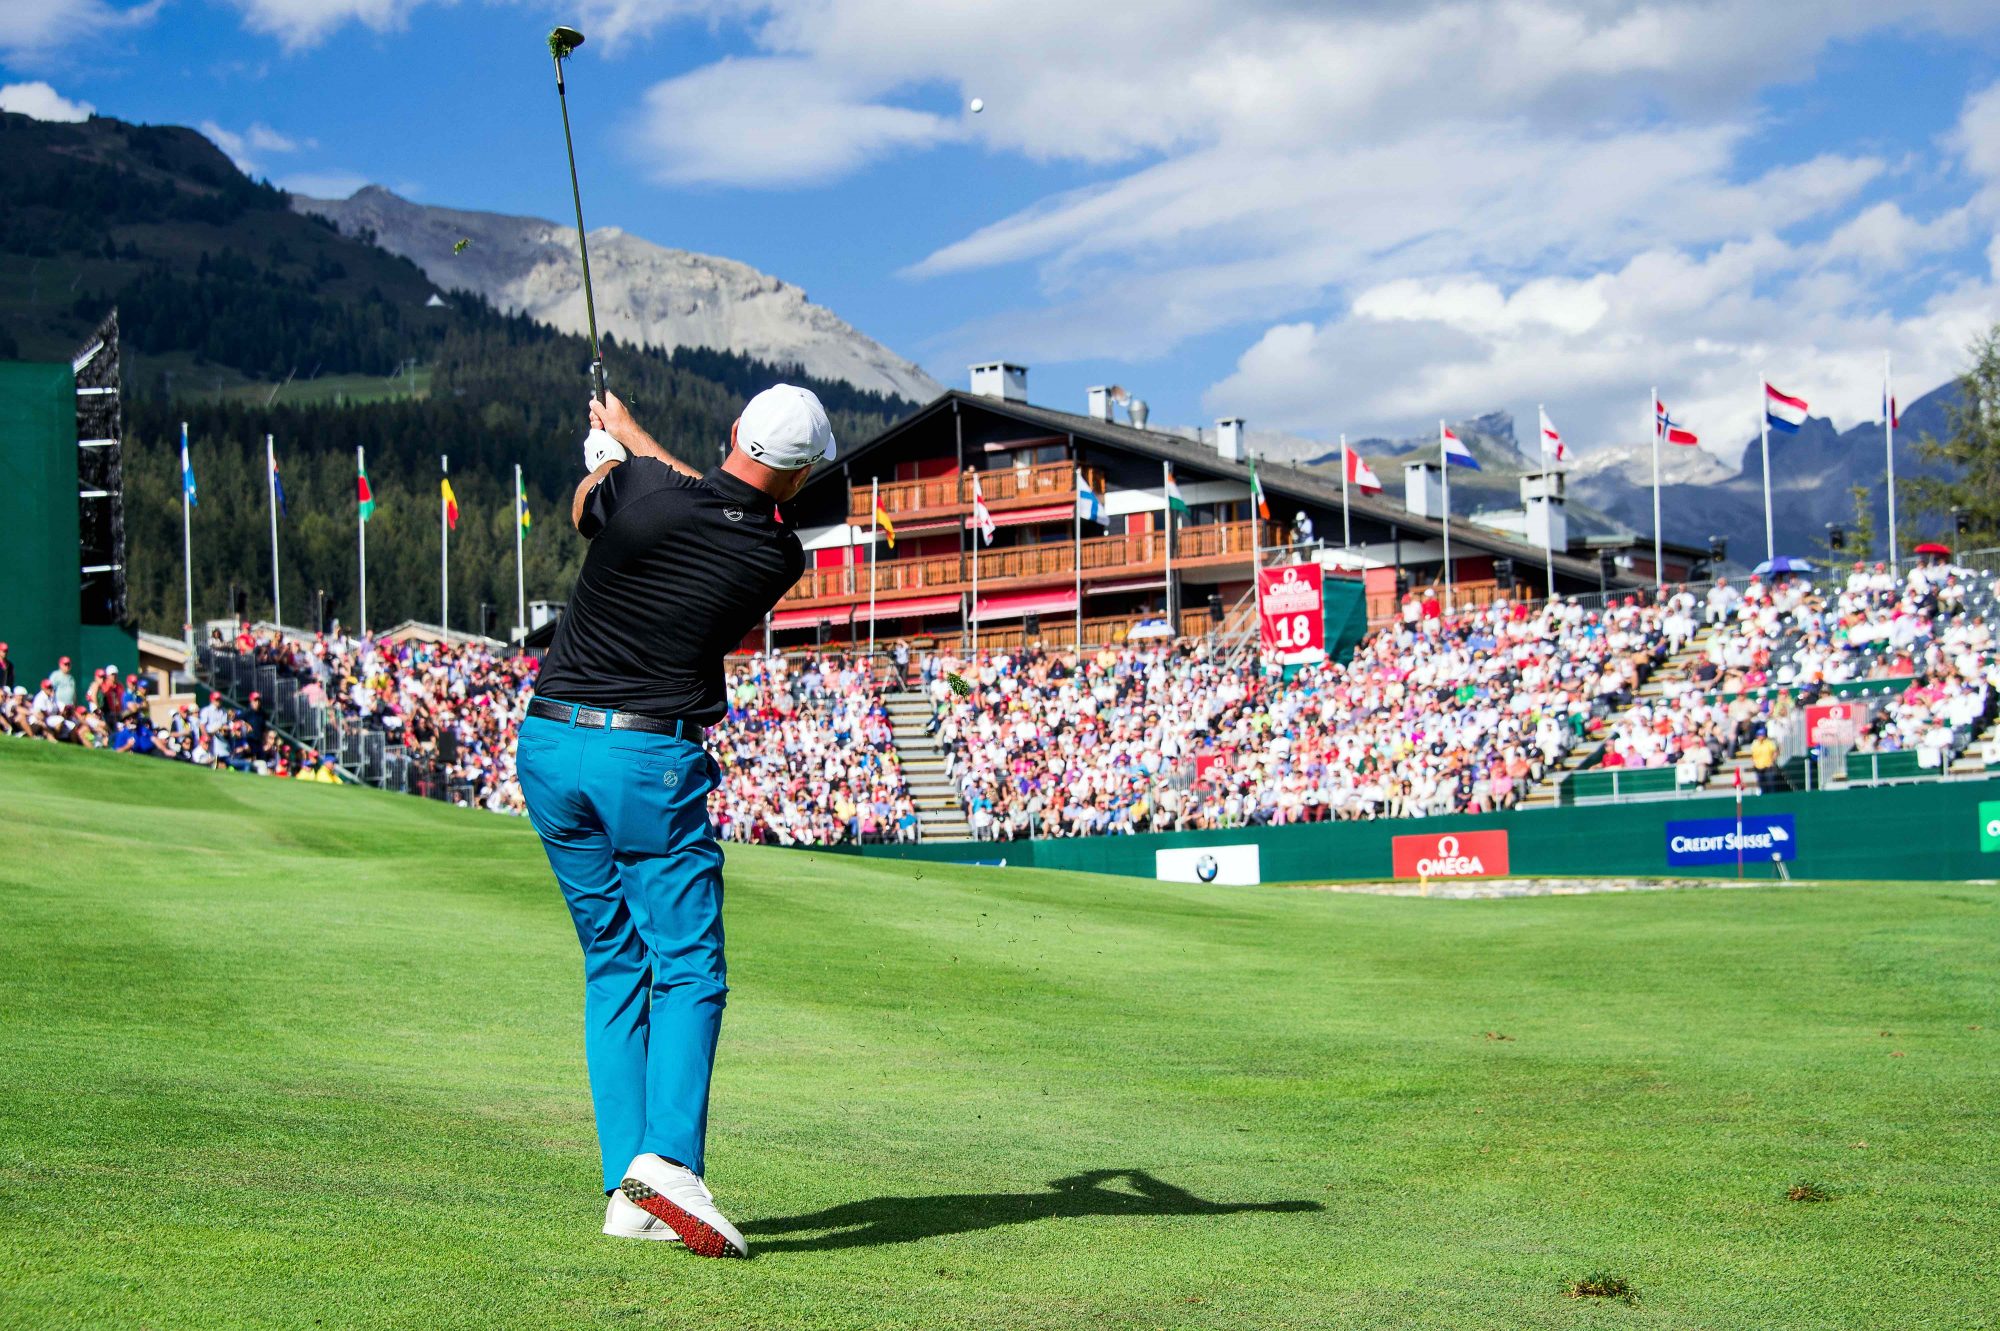 omega golf crans montana 2019